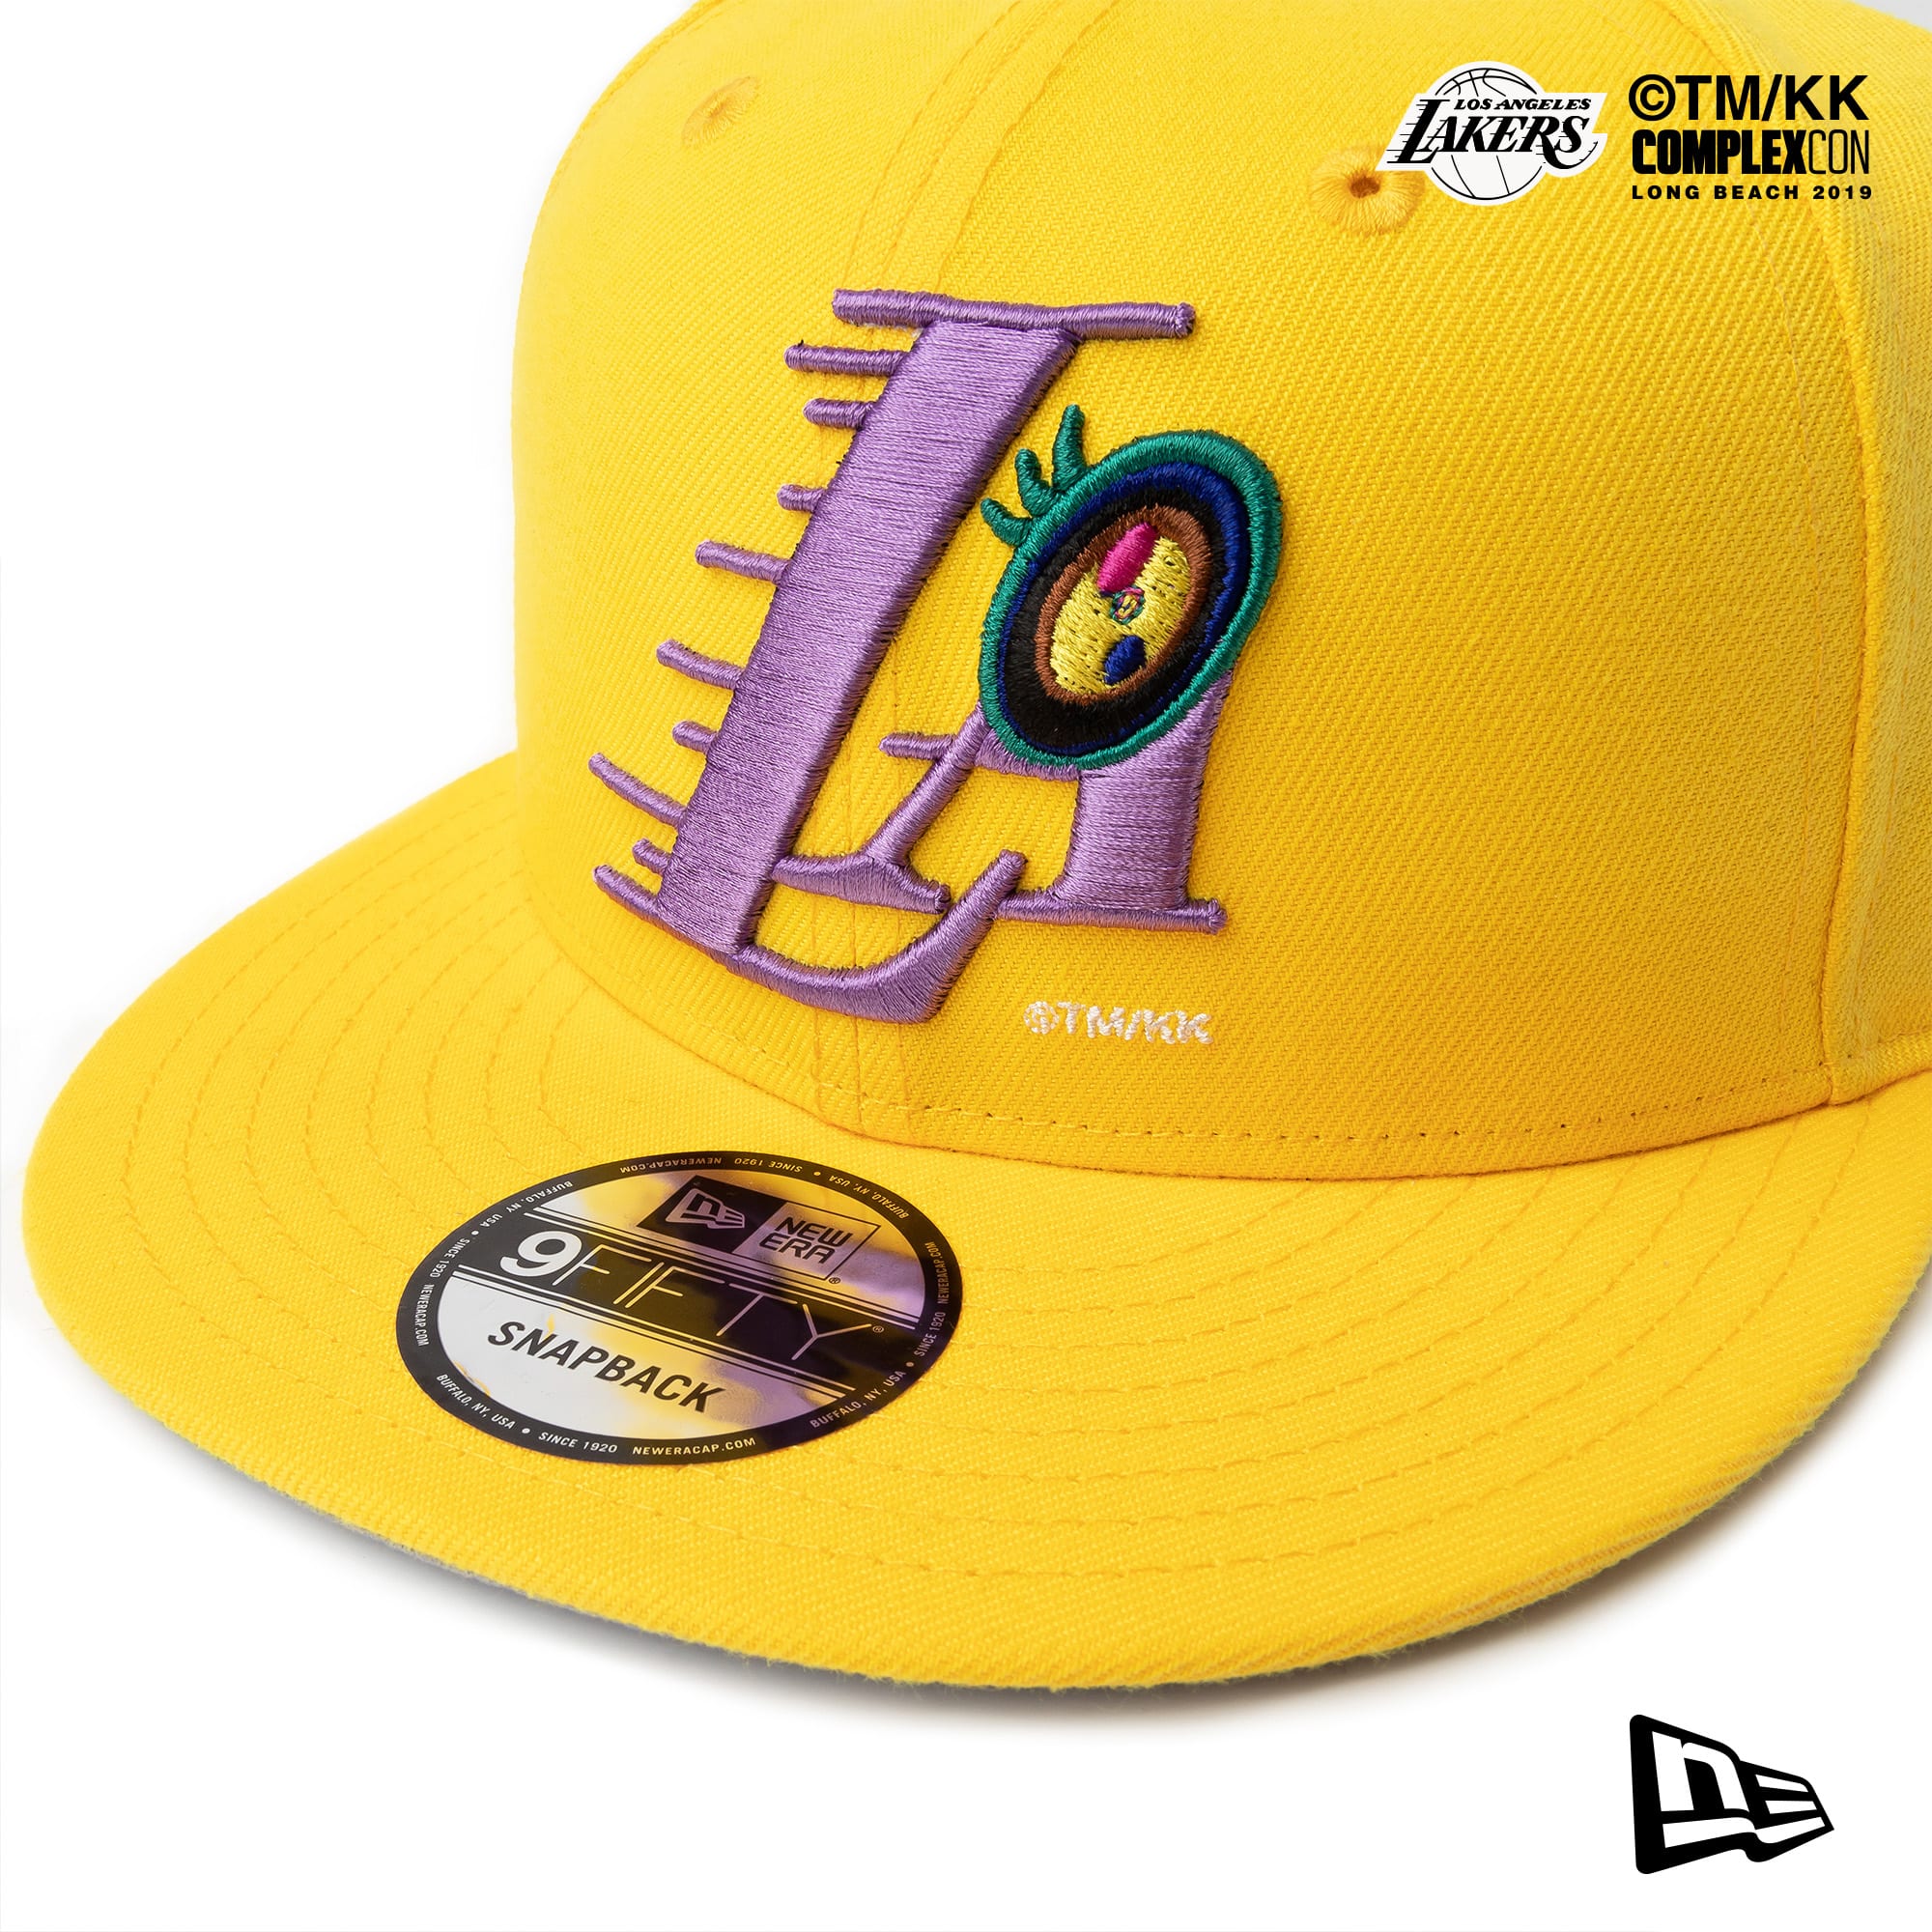 New Era Complexcon Lakers Hat